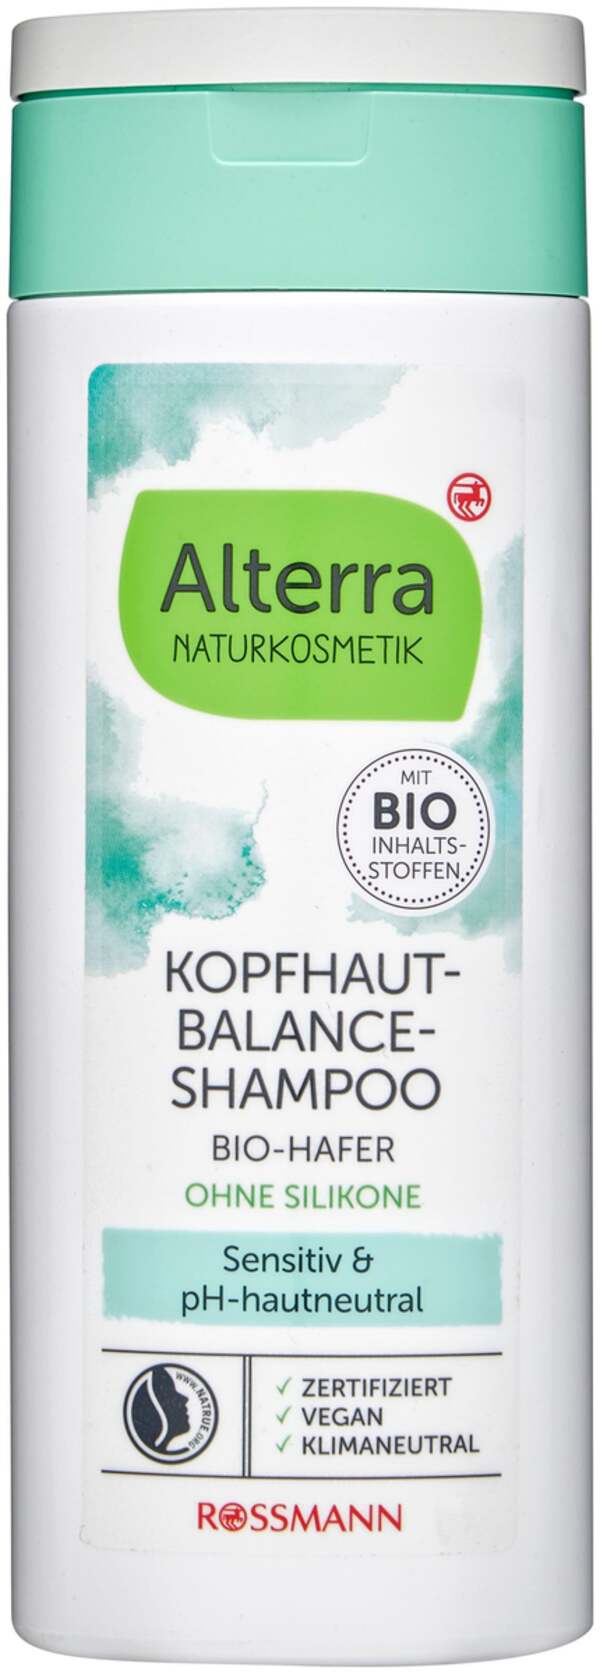 Alterra Kopfhaut Balance Shampoo